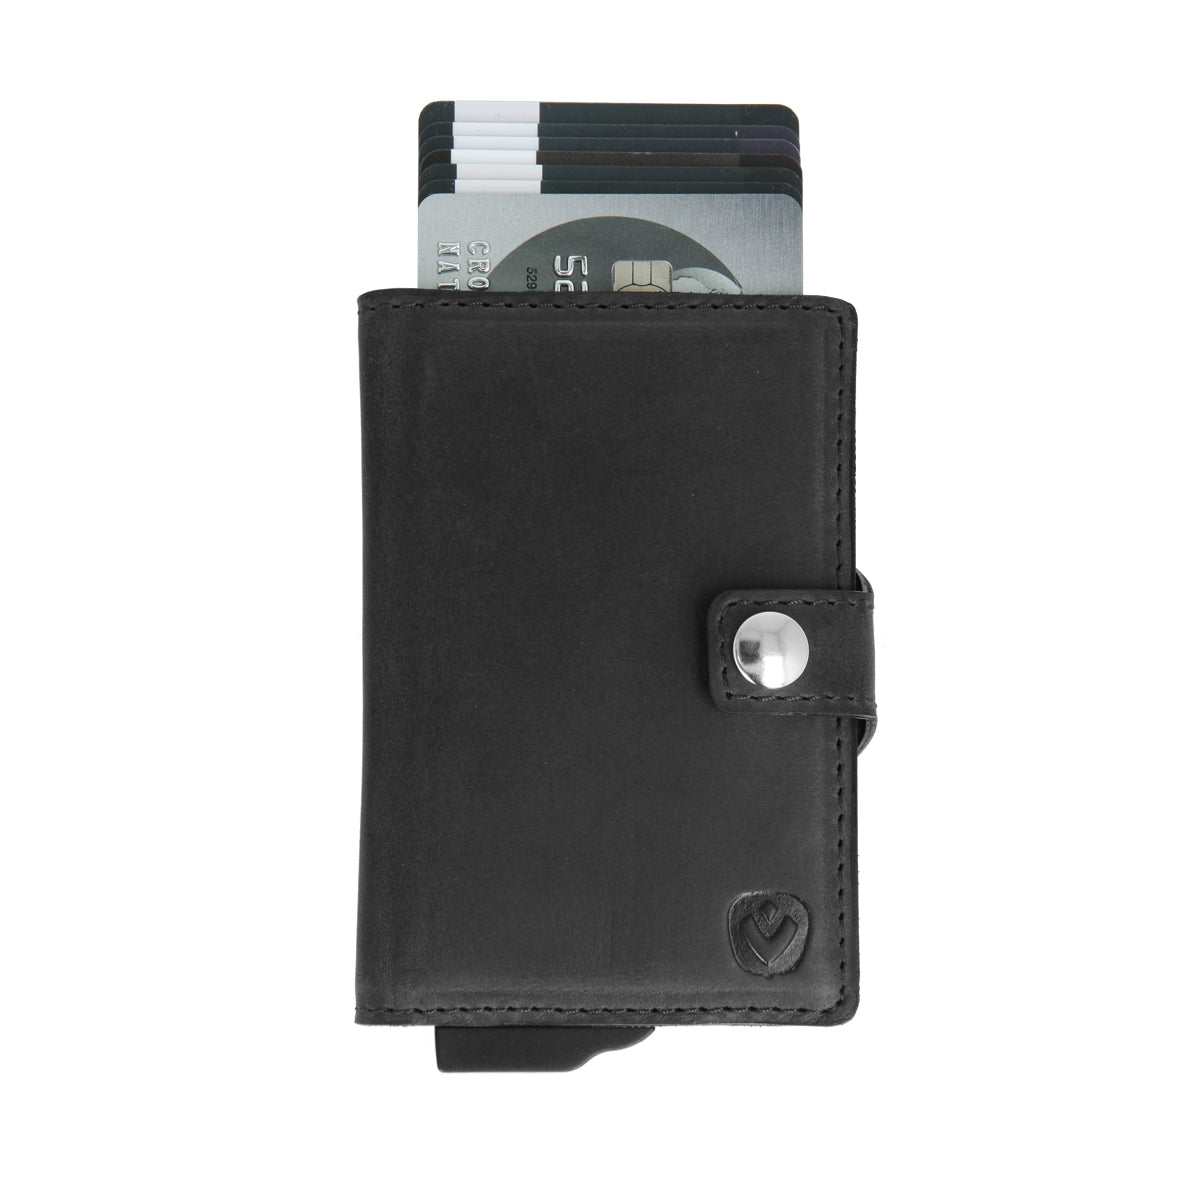 Card Case Plus Wallet Vintage Black